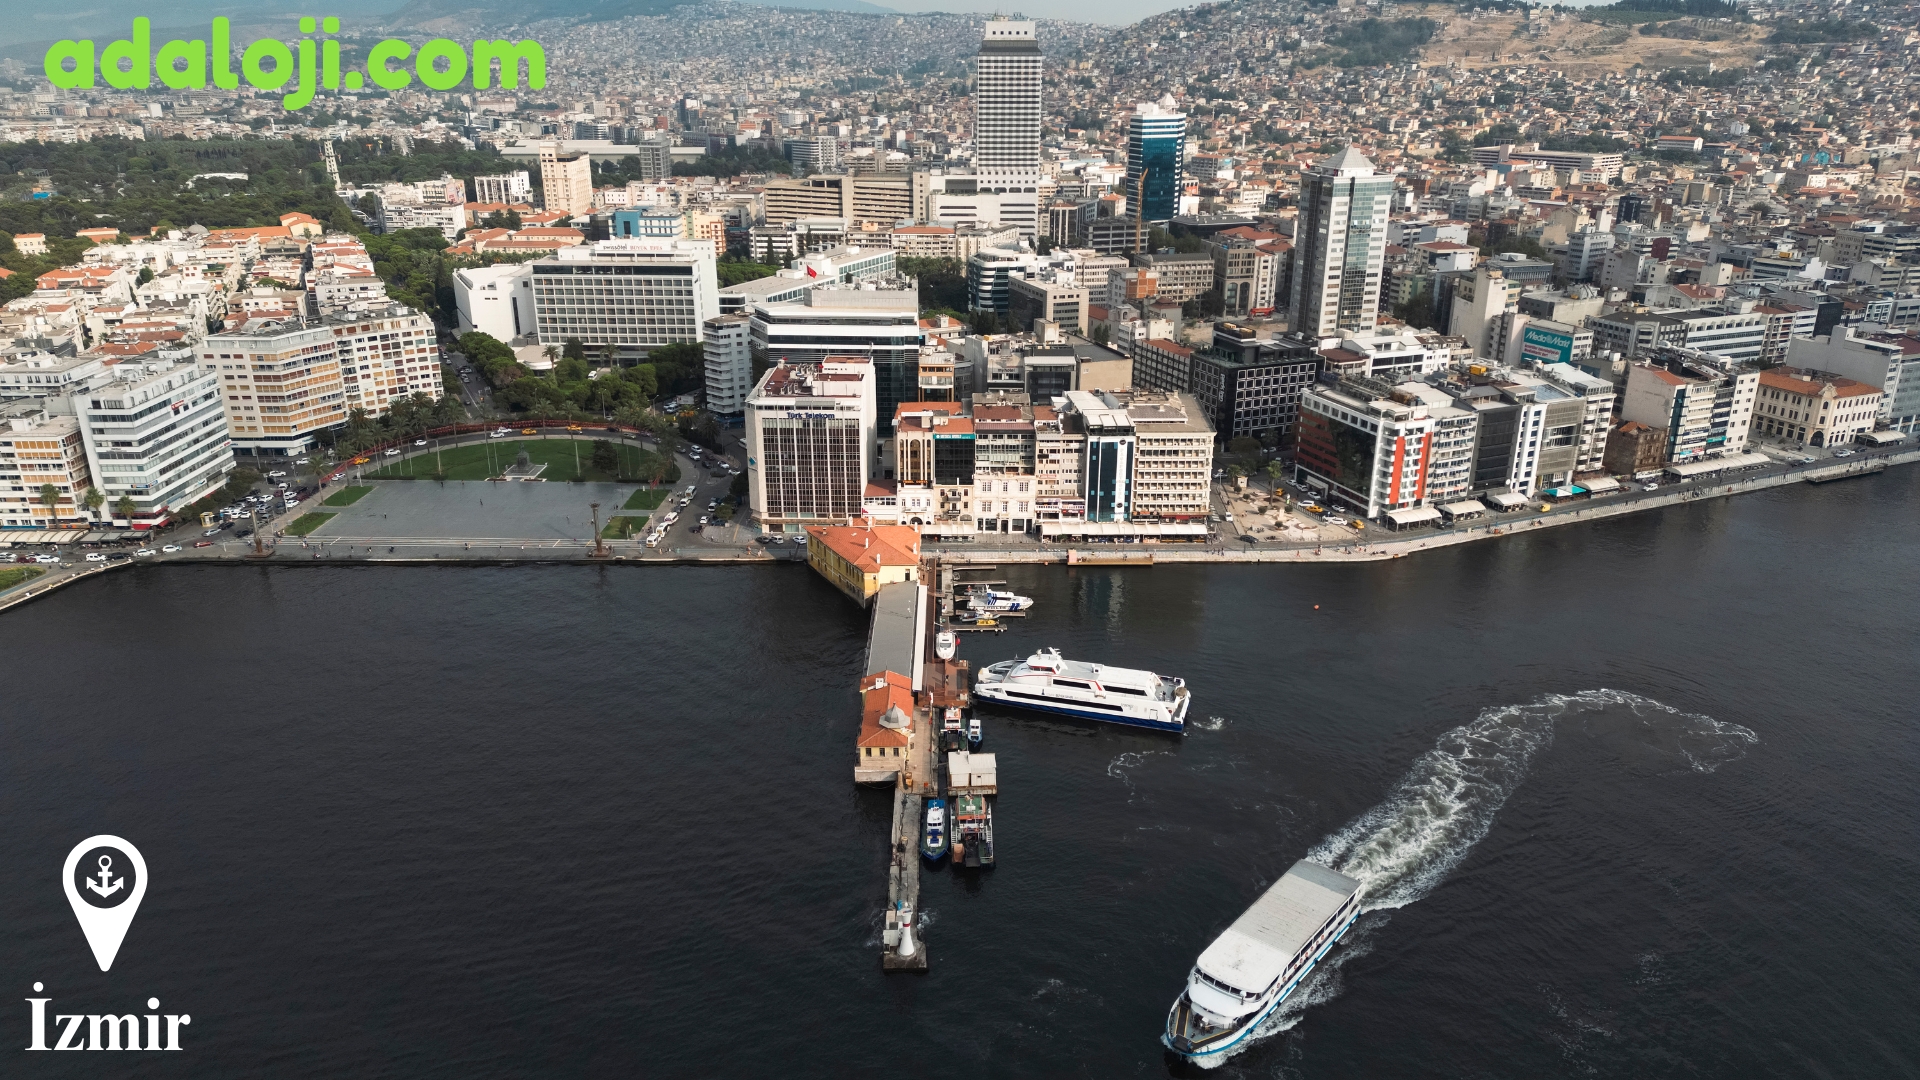 Izmir  - Your Gateway to the Aegean Sea.